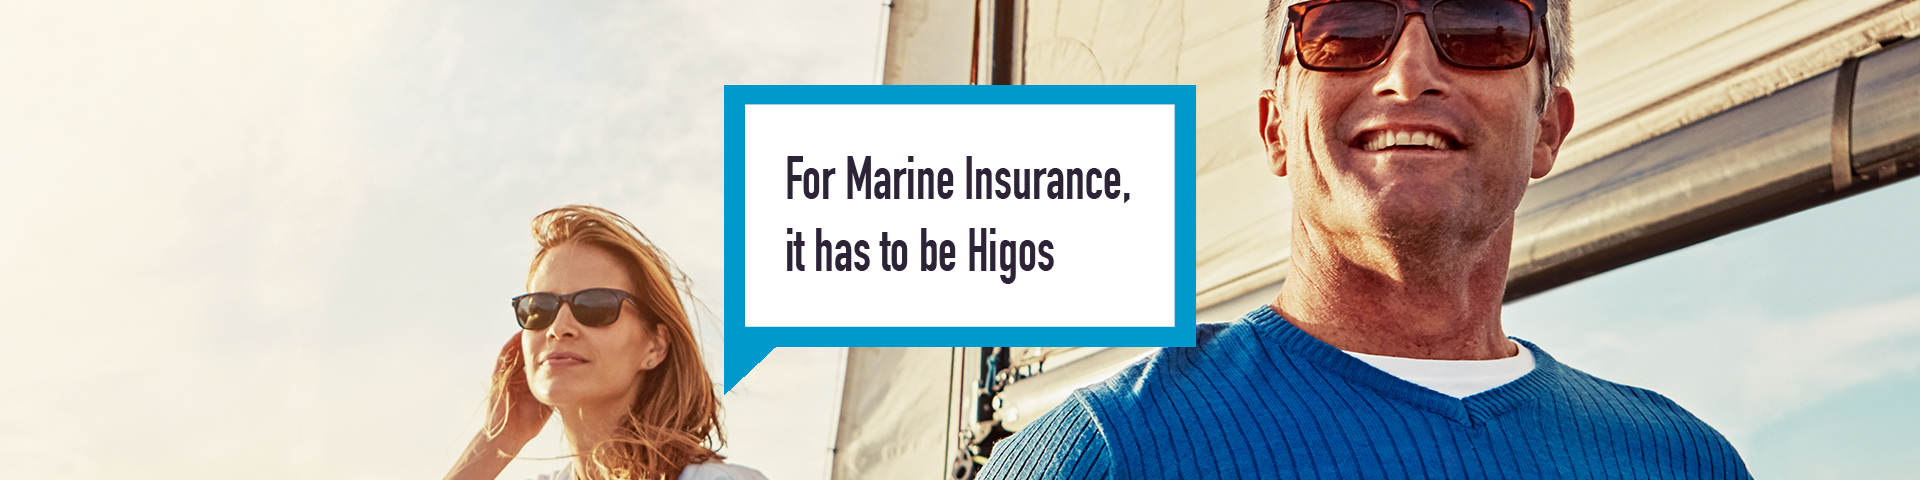 Higos personal insurance marine sailing